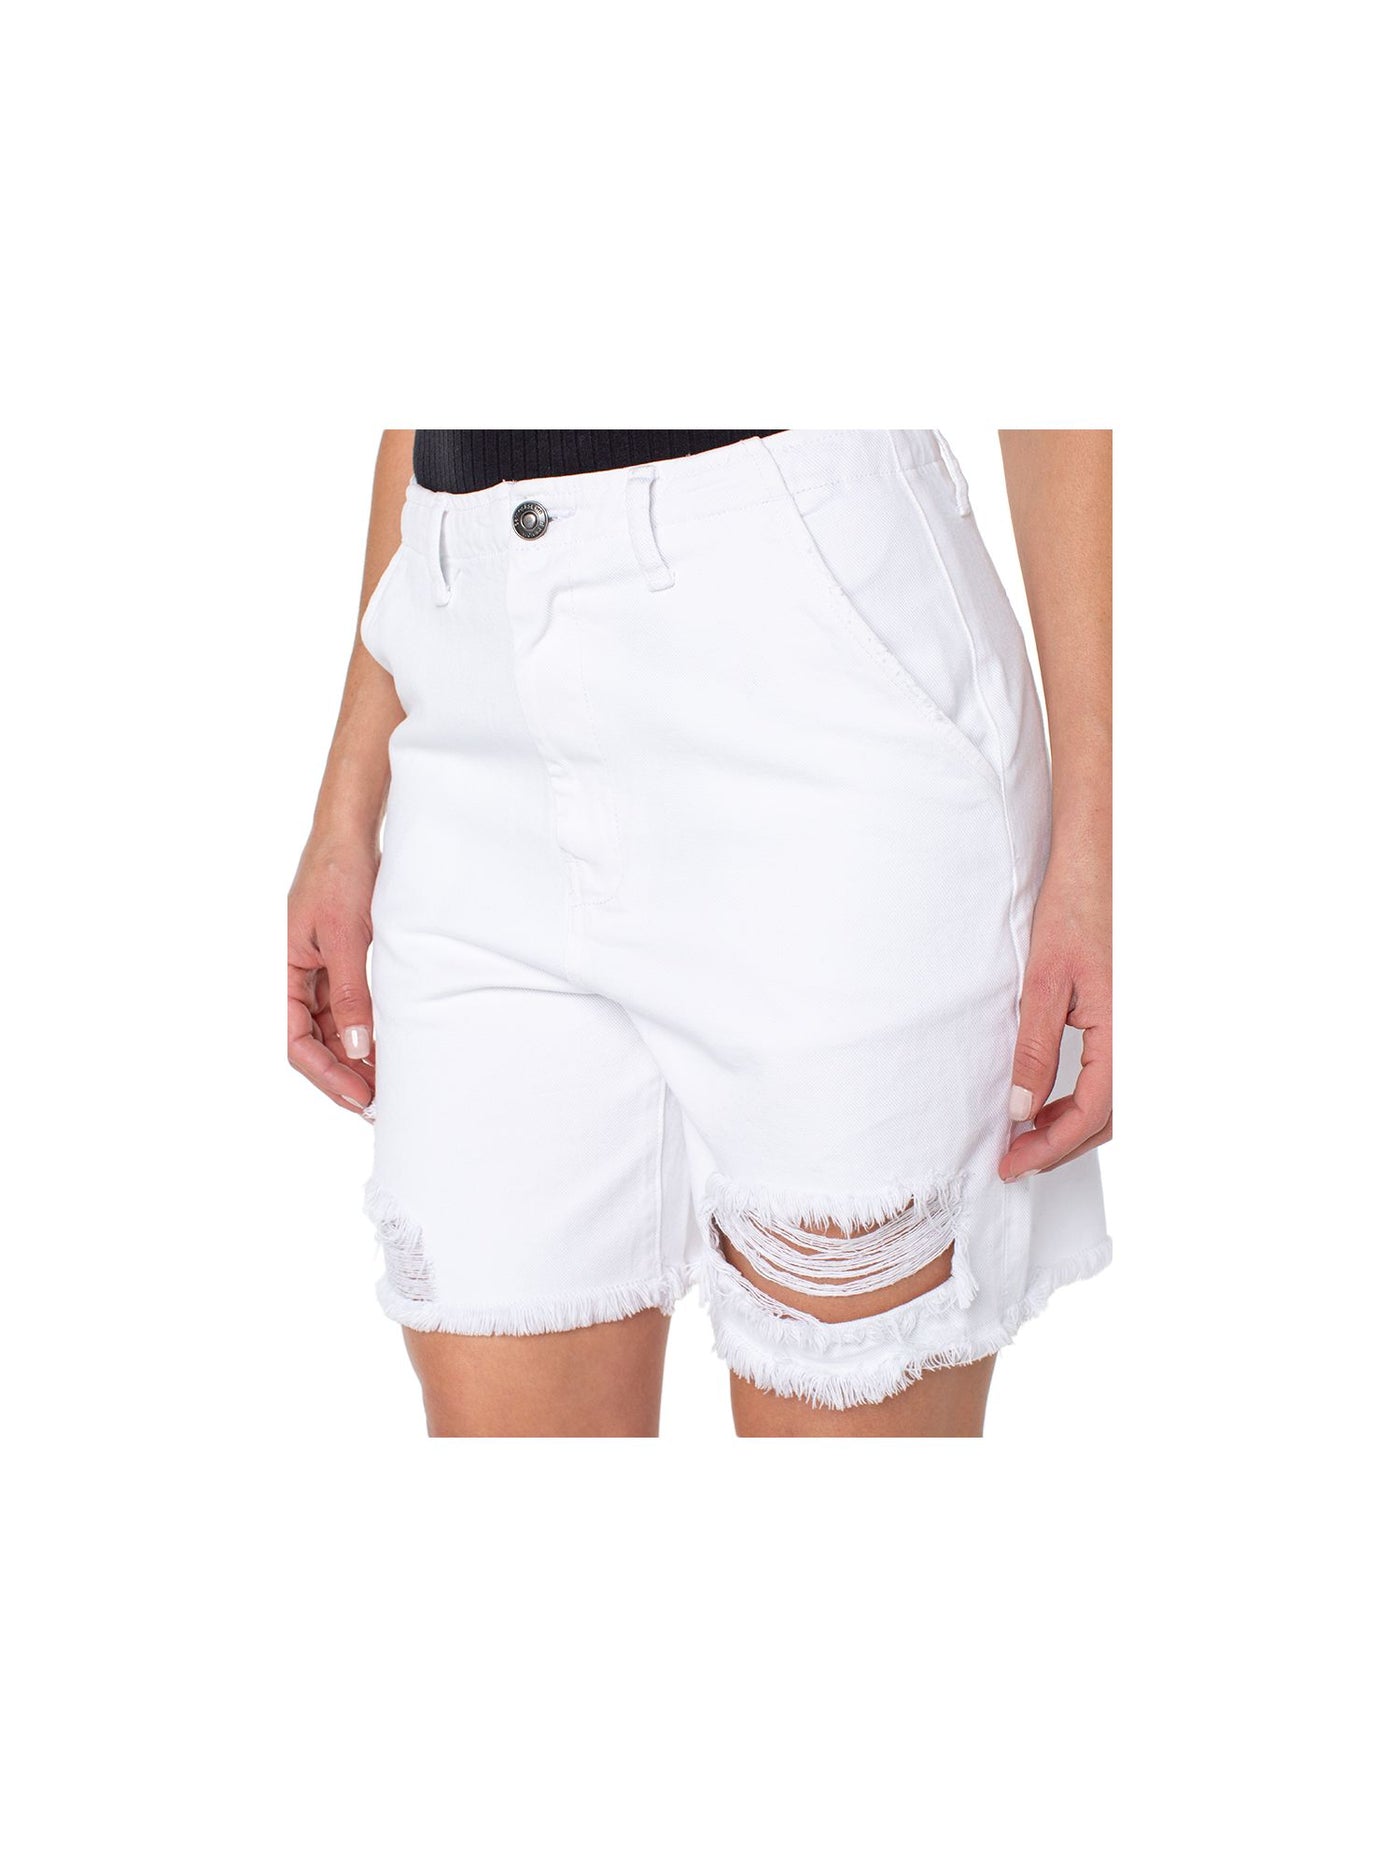 EARNEST SEWN NEW YORK Womens White Zippered Pocketed Frayed Hems High Waist Shorts 28